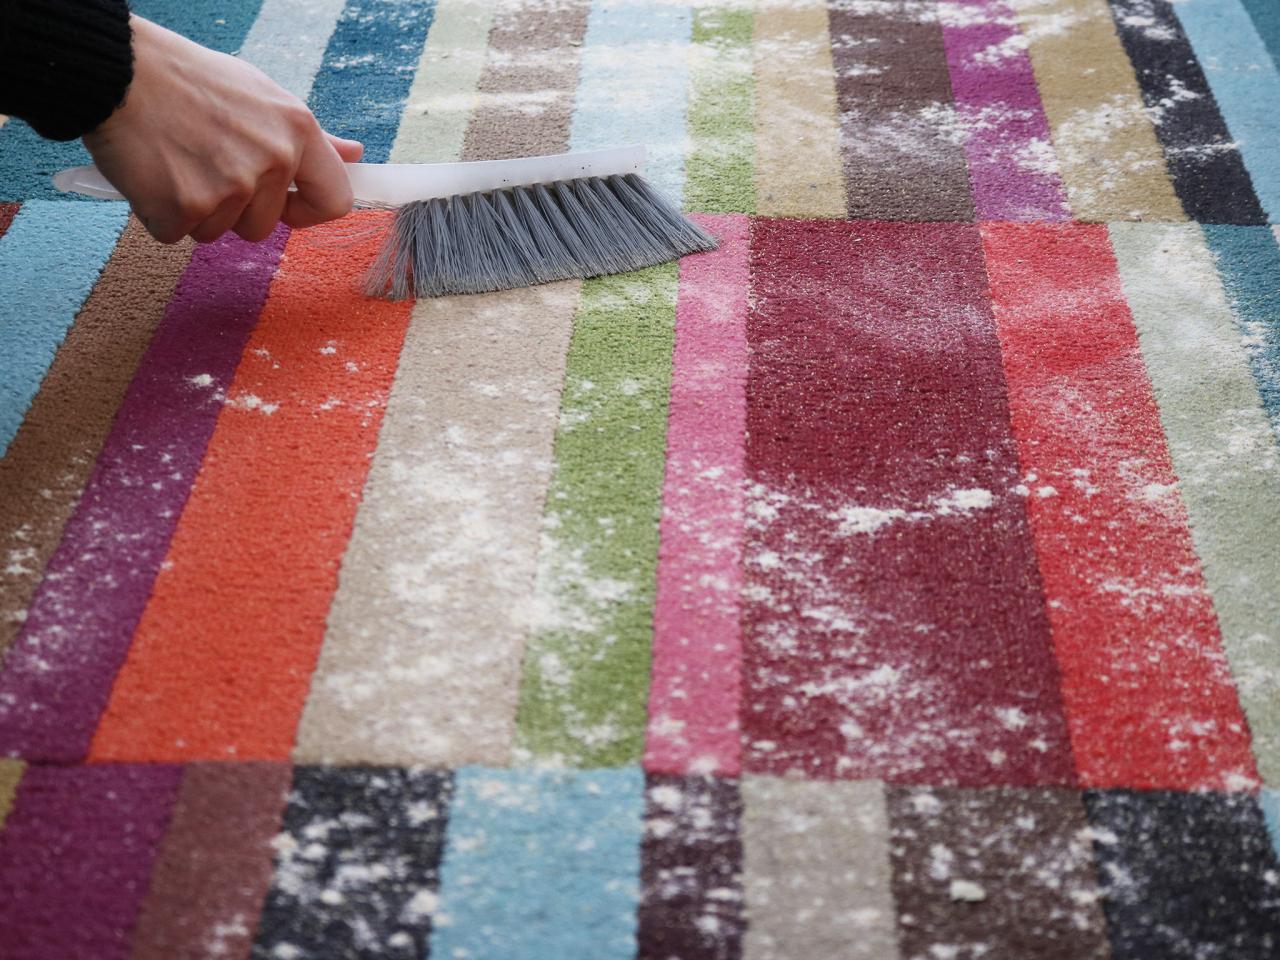 How To Dry A Carpet How to Make DIY Carpet Cleaner | HGTV